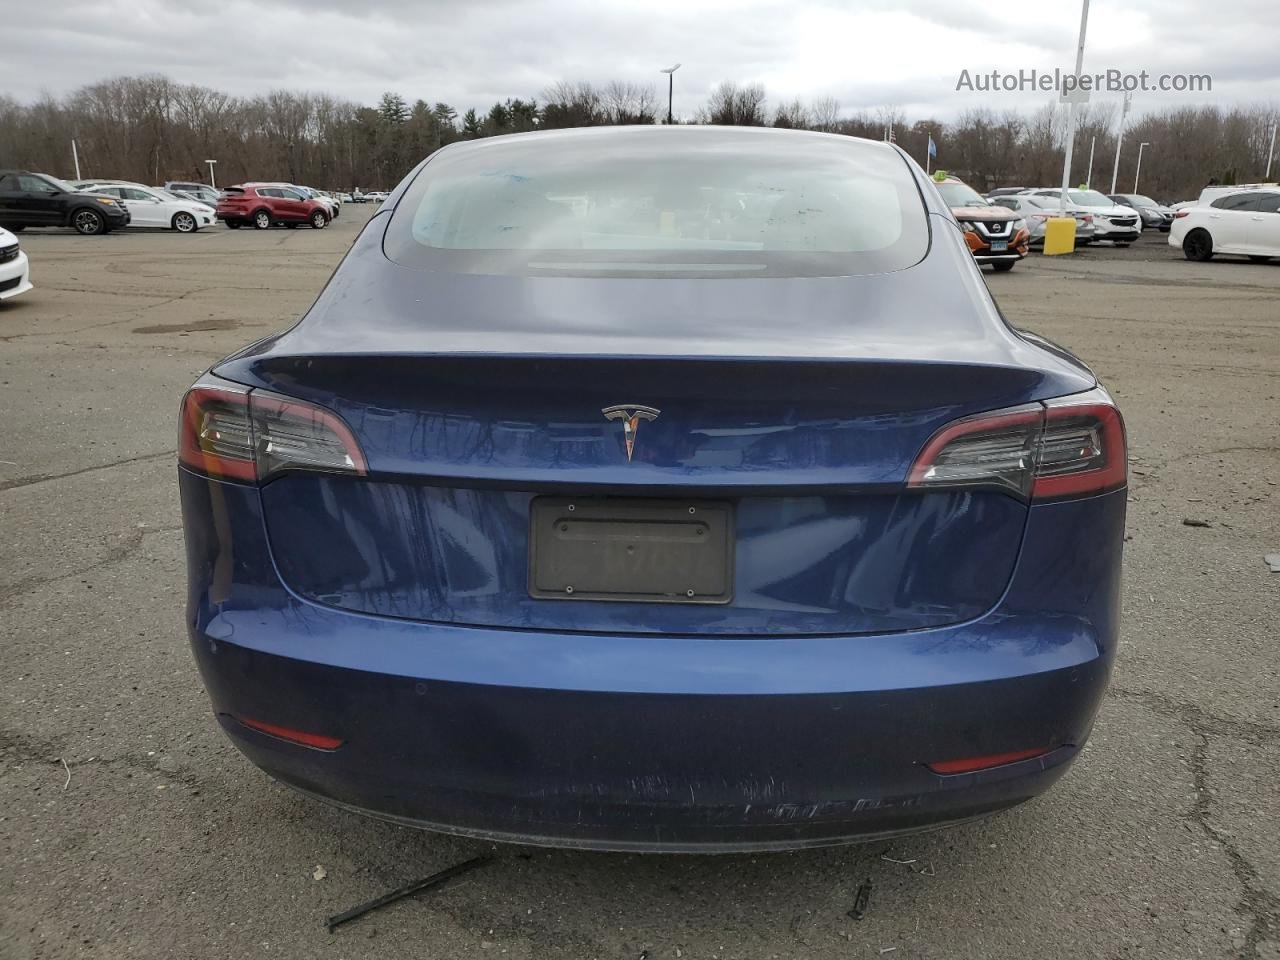 2022 Tesla Model 3  Синий vin: 5YJ3E1EA6NF189638